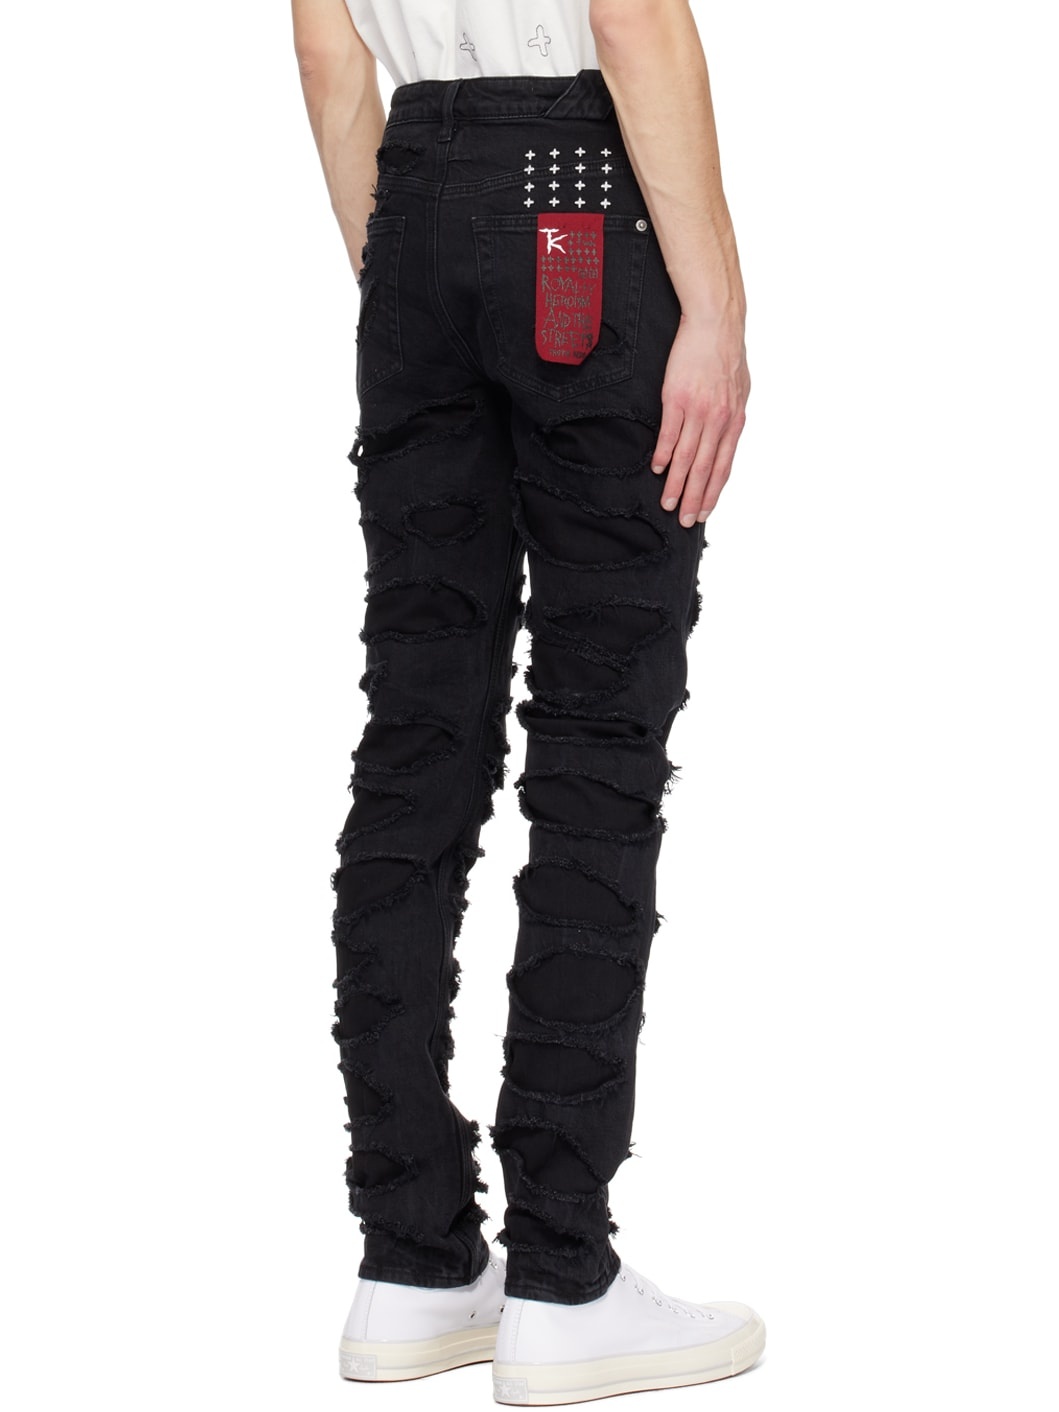 Black Trippie Redd Edition Chitch Shredded Jeans - 3